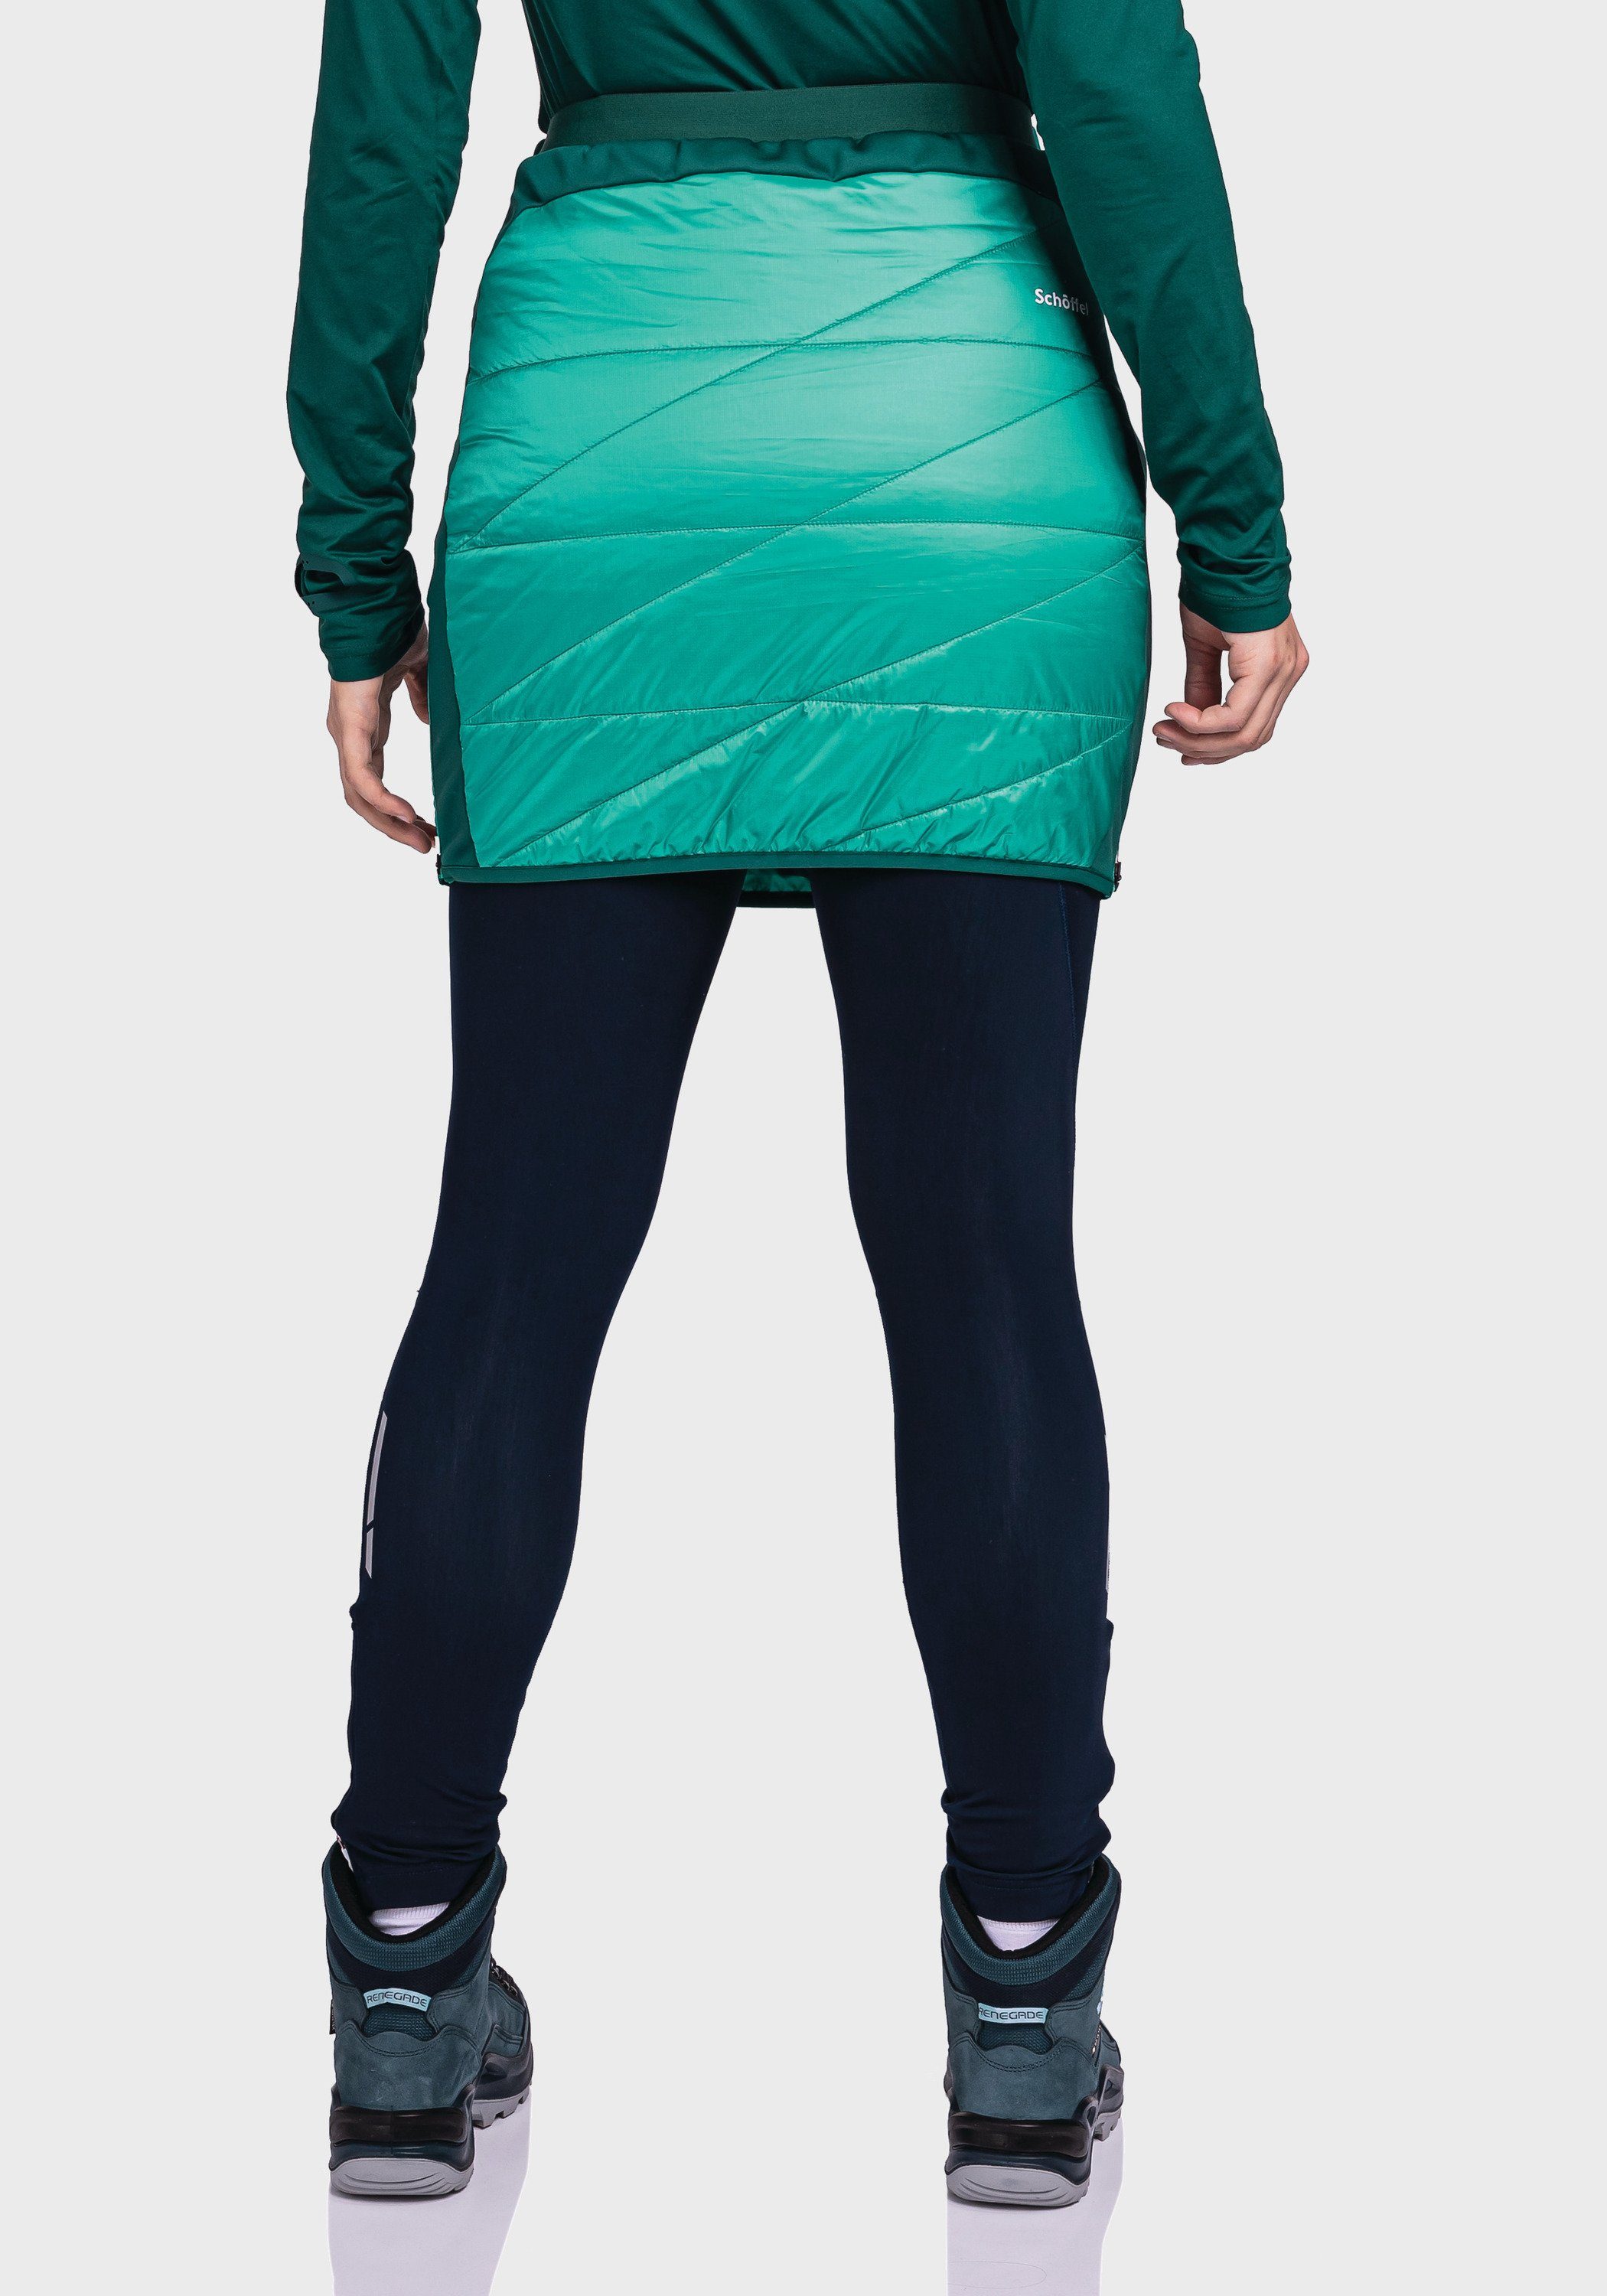 grün L Schöffel Sweatrock Thermo Skirt Stams